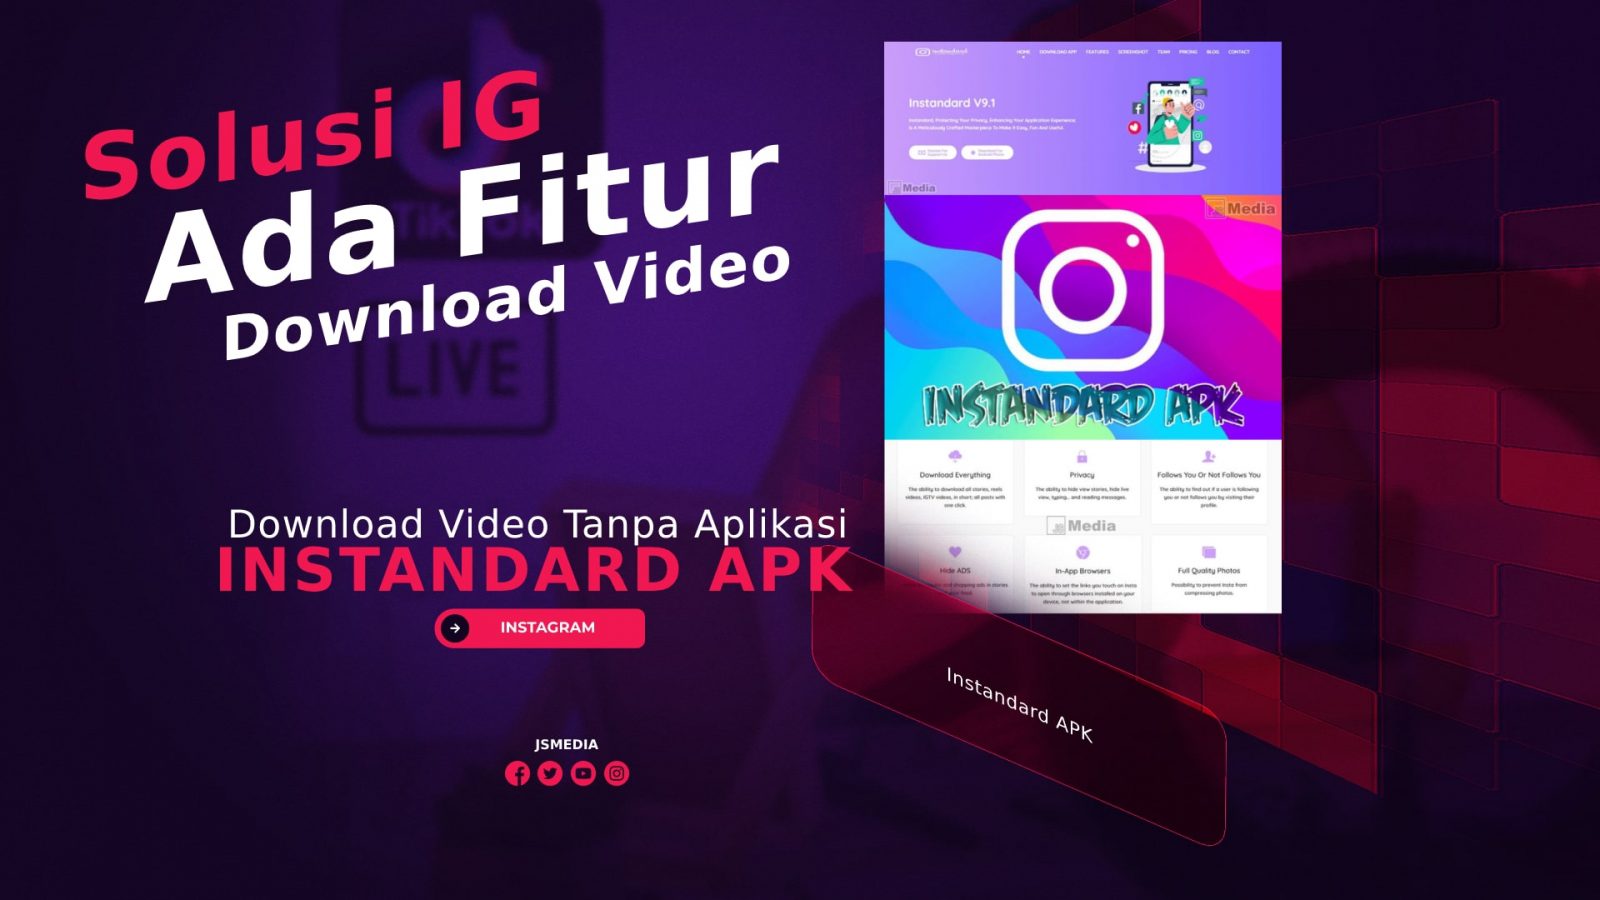 Instandard APK, Solusi IG Ada Fitur Download Video